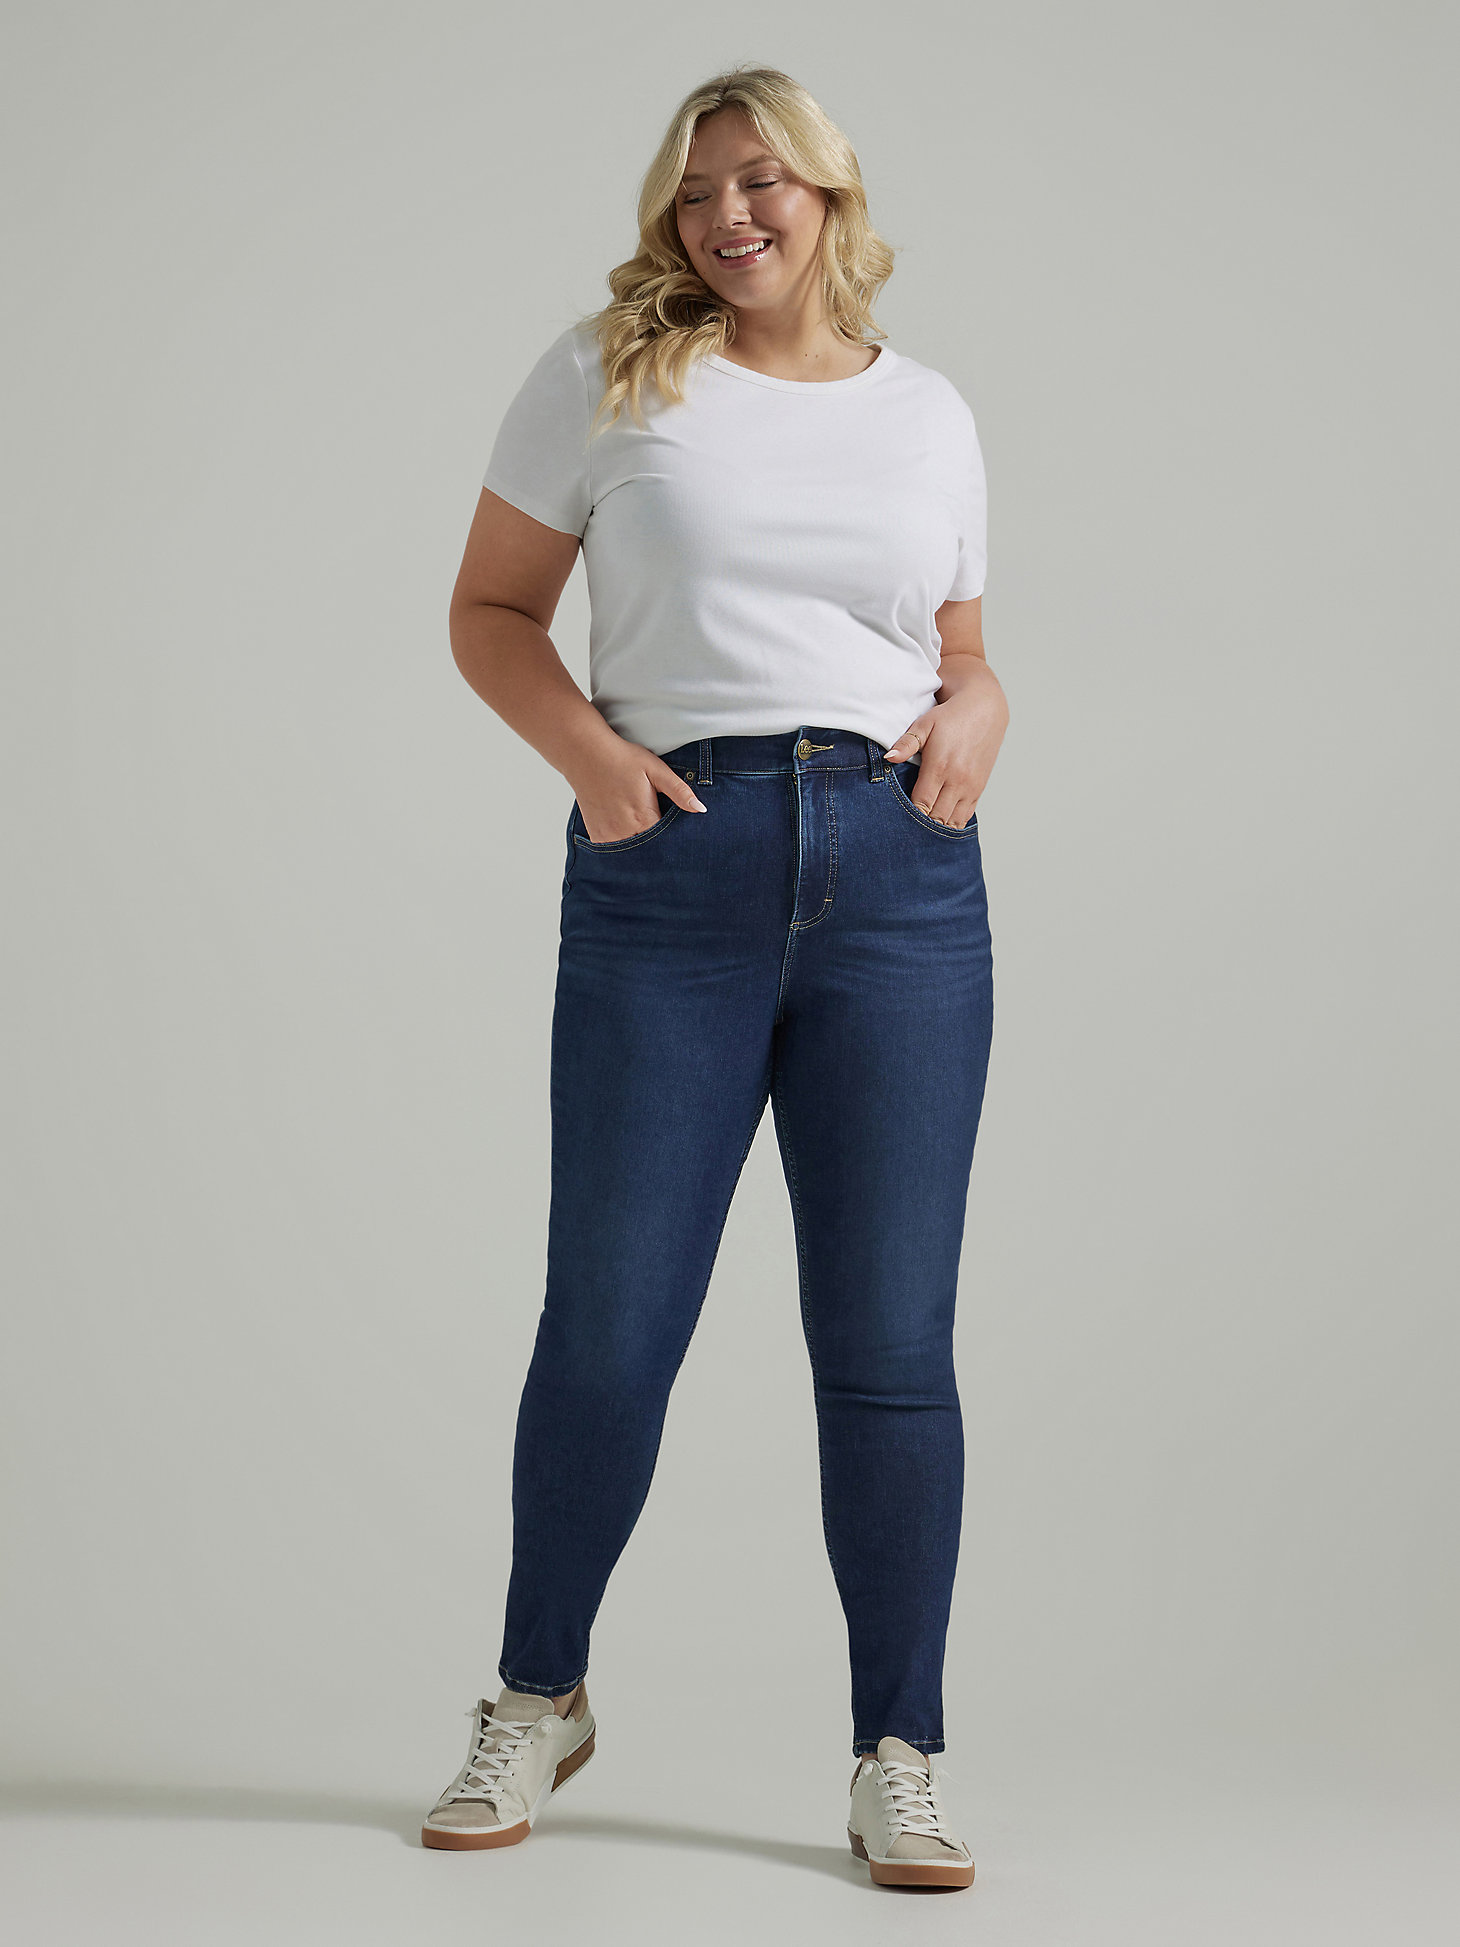 Women's Ultra Lux Comfort with Flex Motion Skinny Jean (Plus) in Deepest Dark alternative view 1